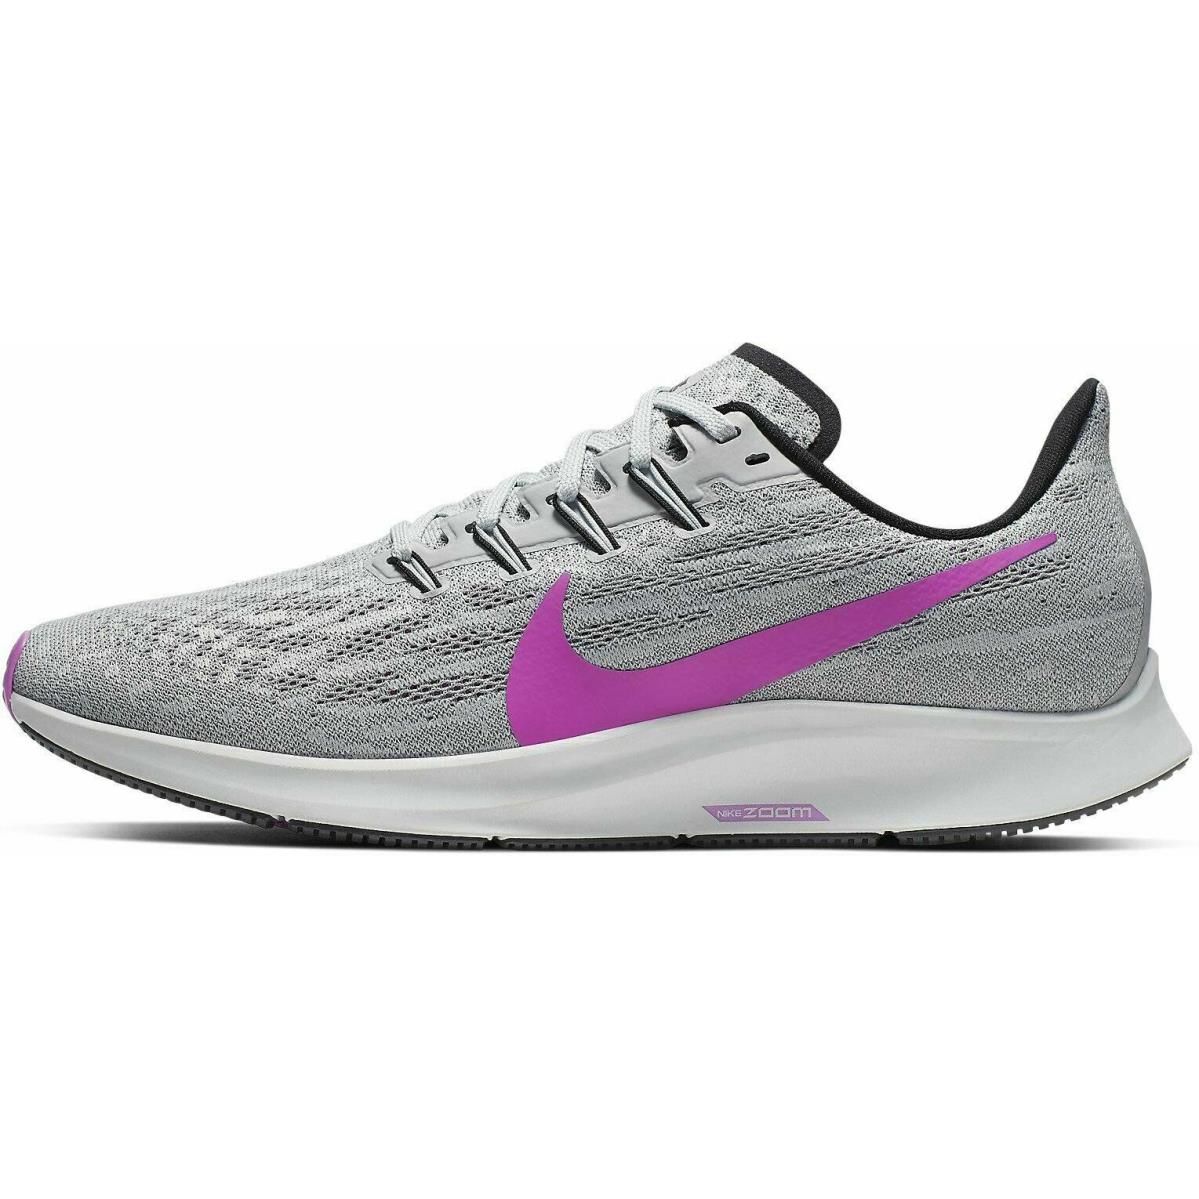 Nike Air Zoom Pegasus 36 Mens Running Shoes Pure Pltnm Violet AQ2203-007 US Sz 9